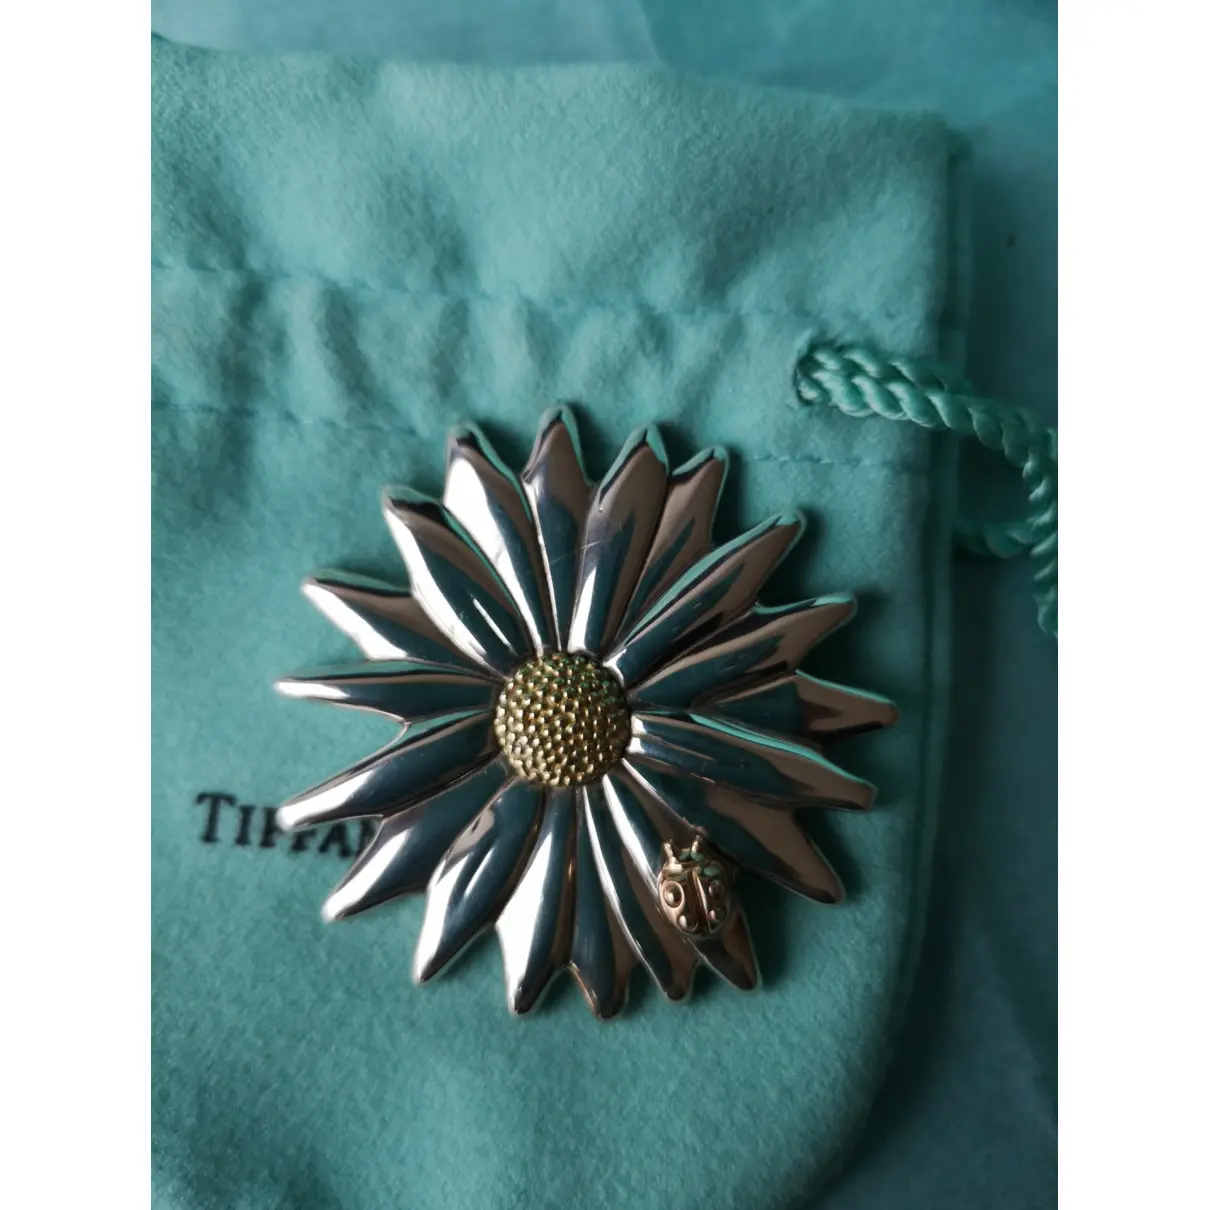 Buy Tiffany & Co Silver pin & brooche online